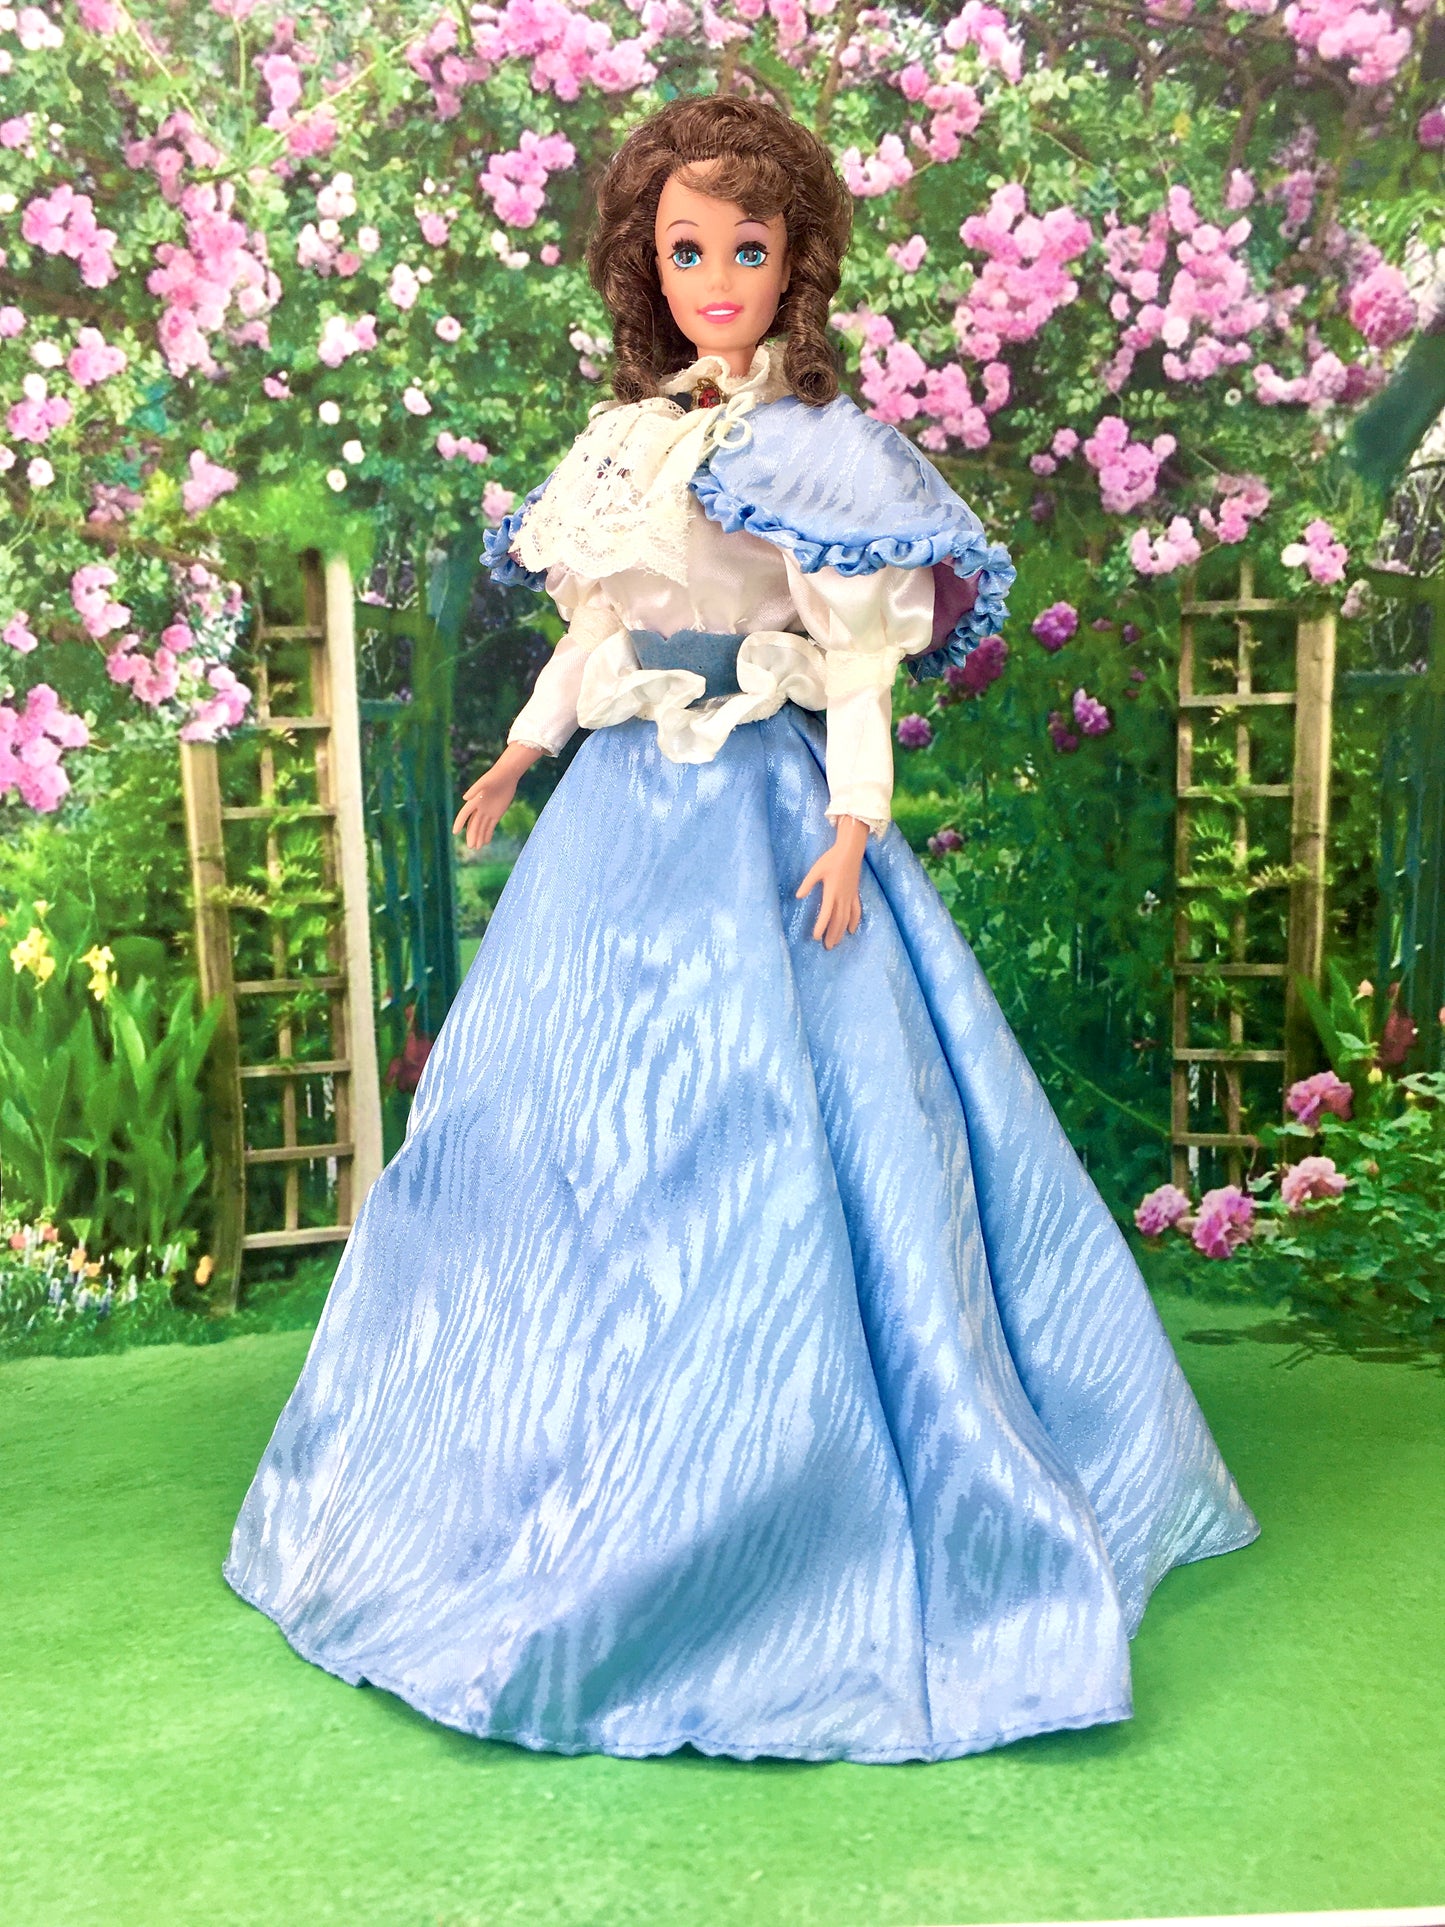 Vintage Barbie Doll Great Eras Gibson Girl Barbie Doll by Mattel Circa 1993